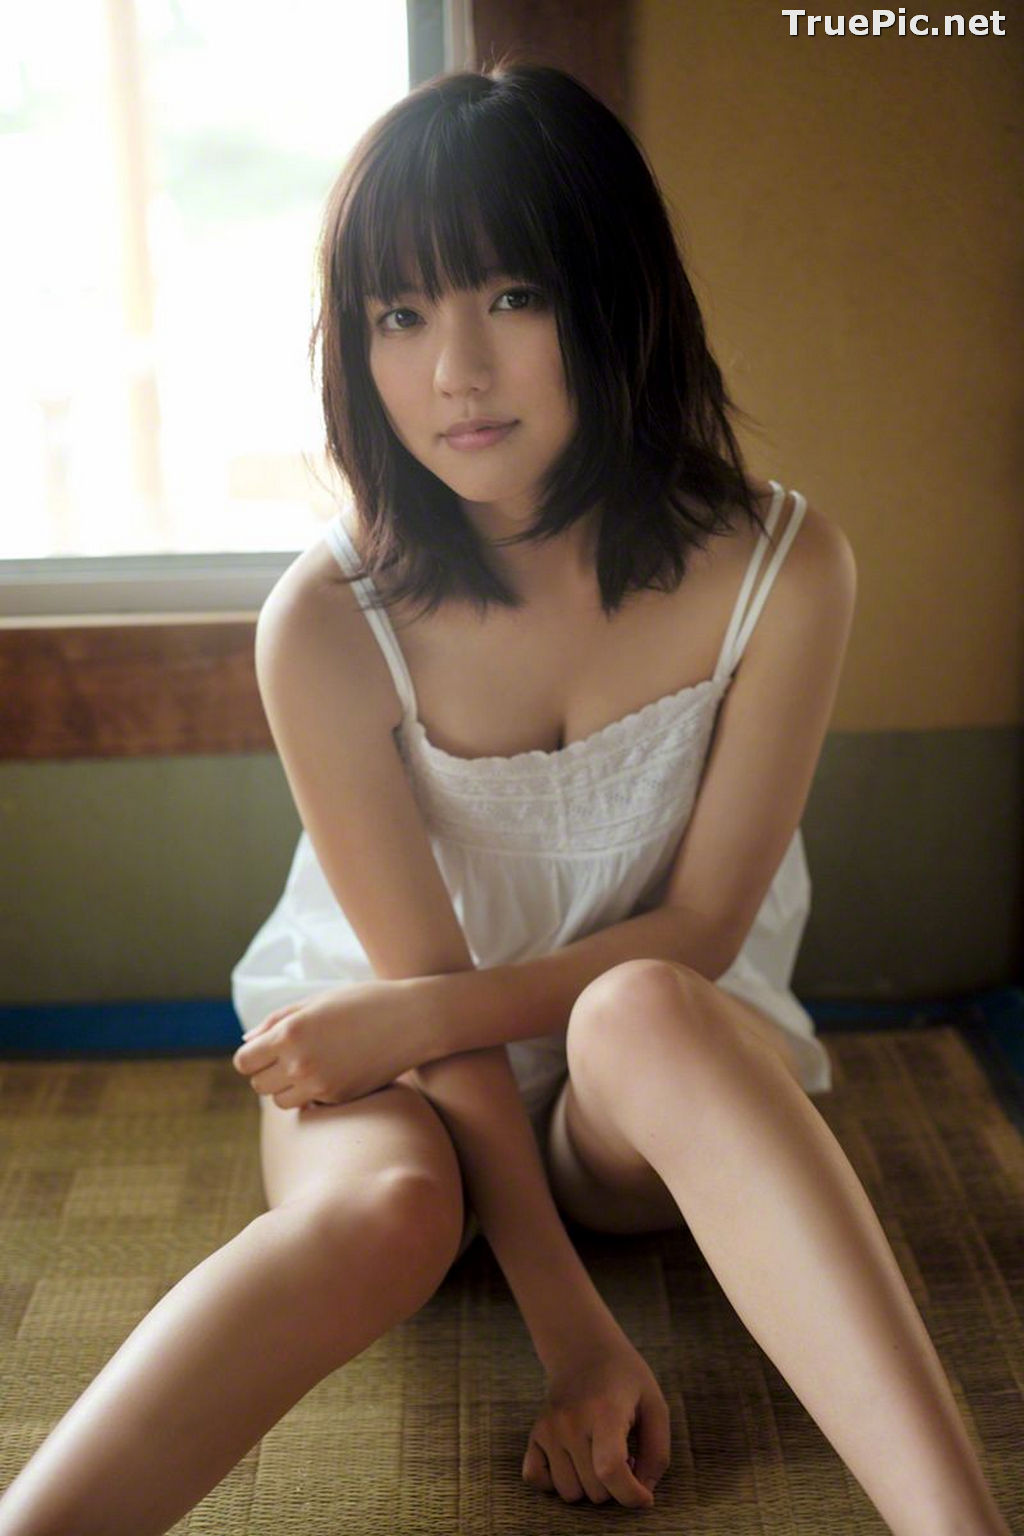 Image Wanibooks No.130 - Japanese Idol Singer and Actress - Erina Mano - TruePic.net - Picture-110